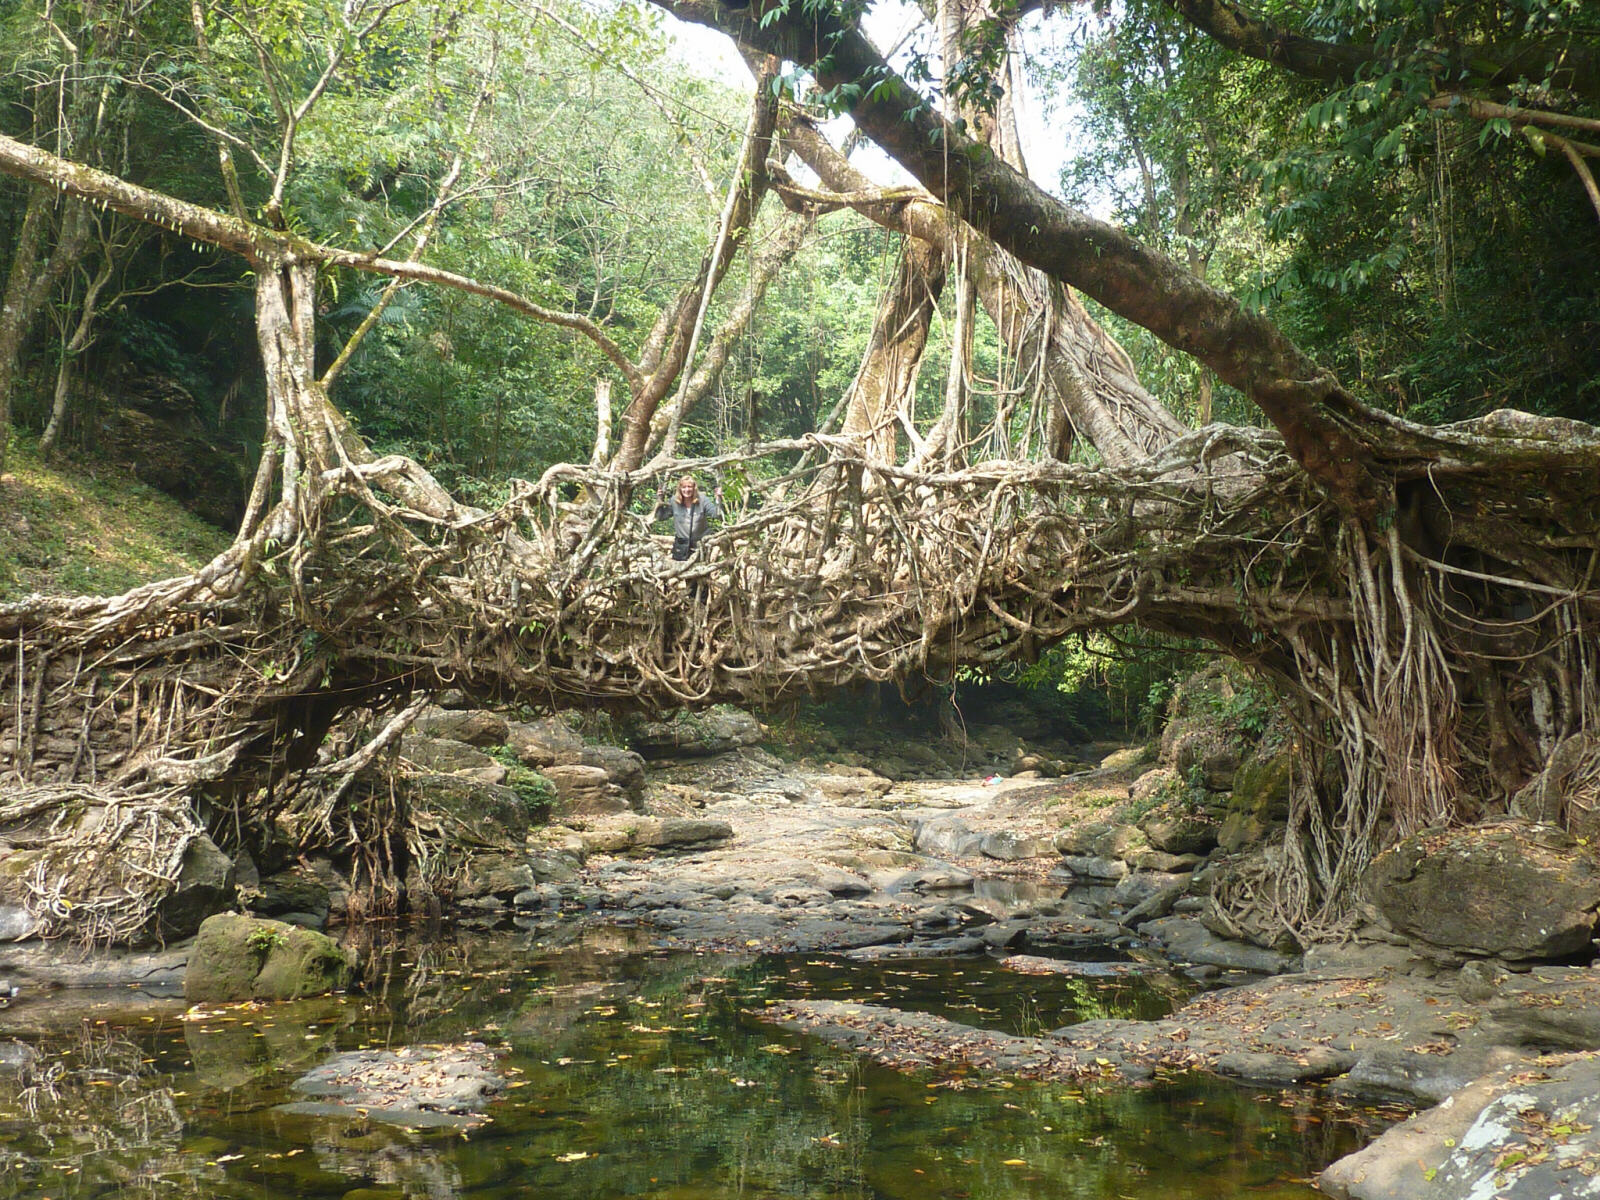 The 'living bridge' in Rivai, Meghalaya state, India